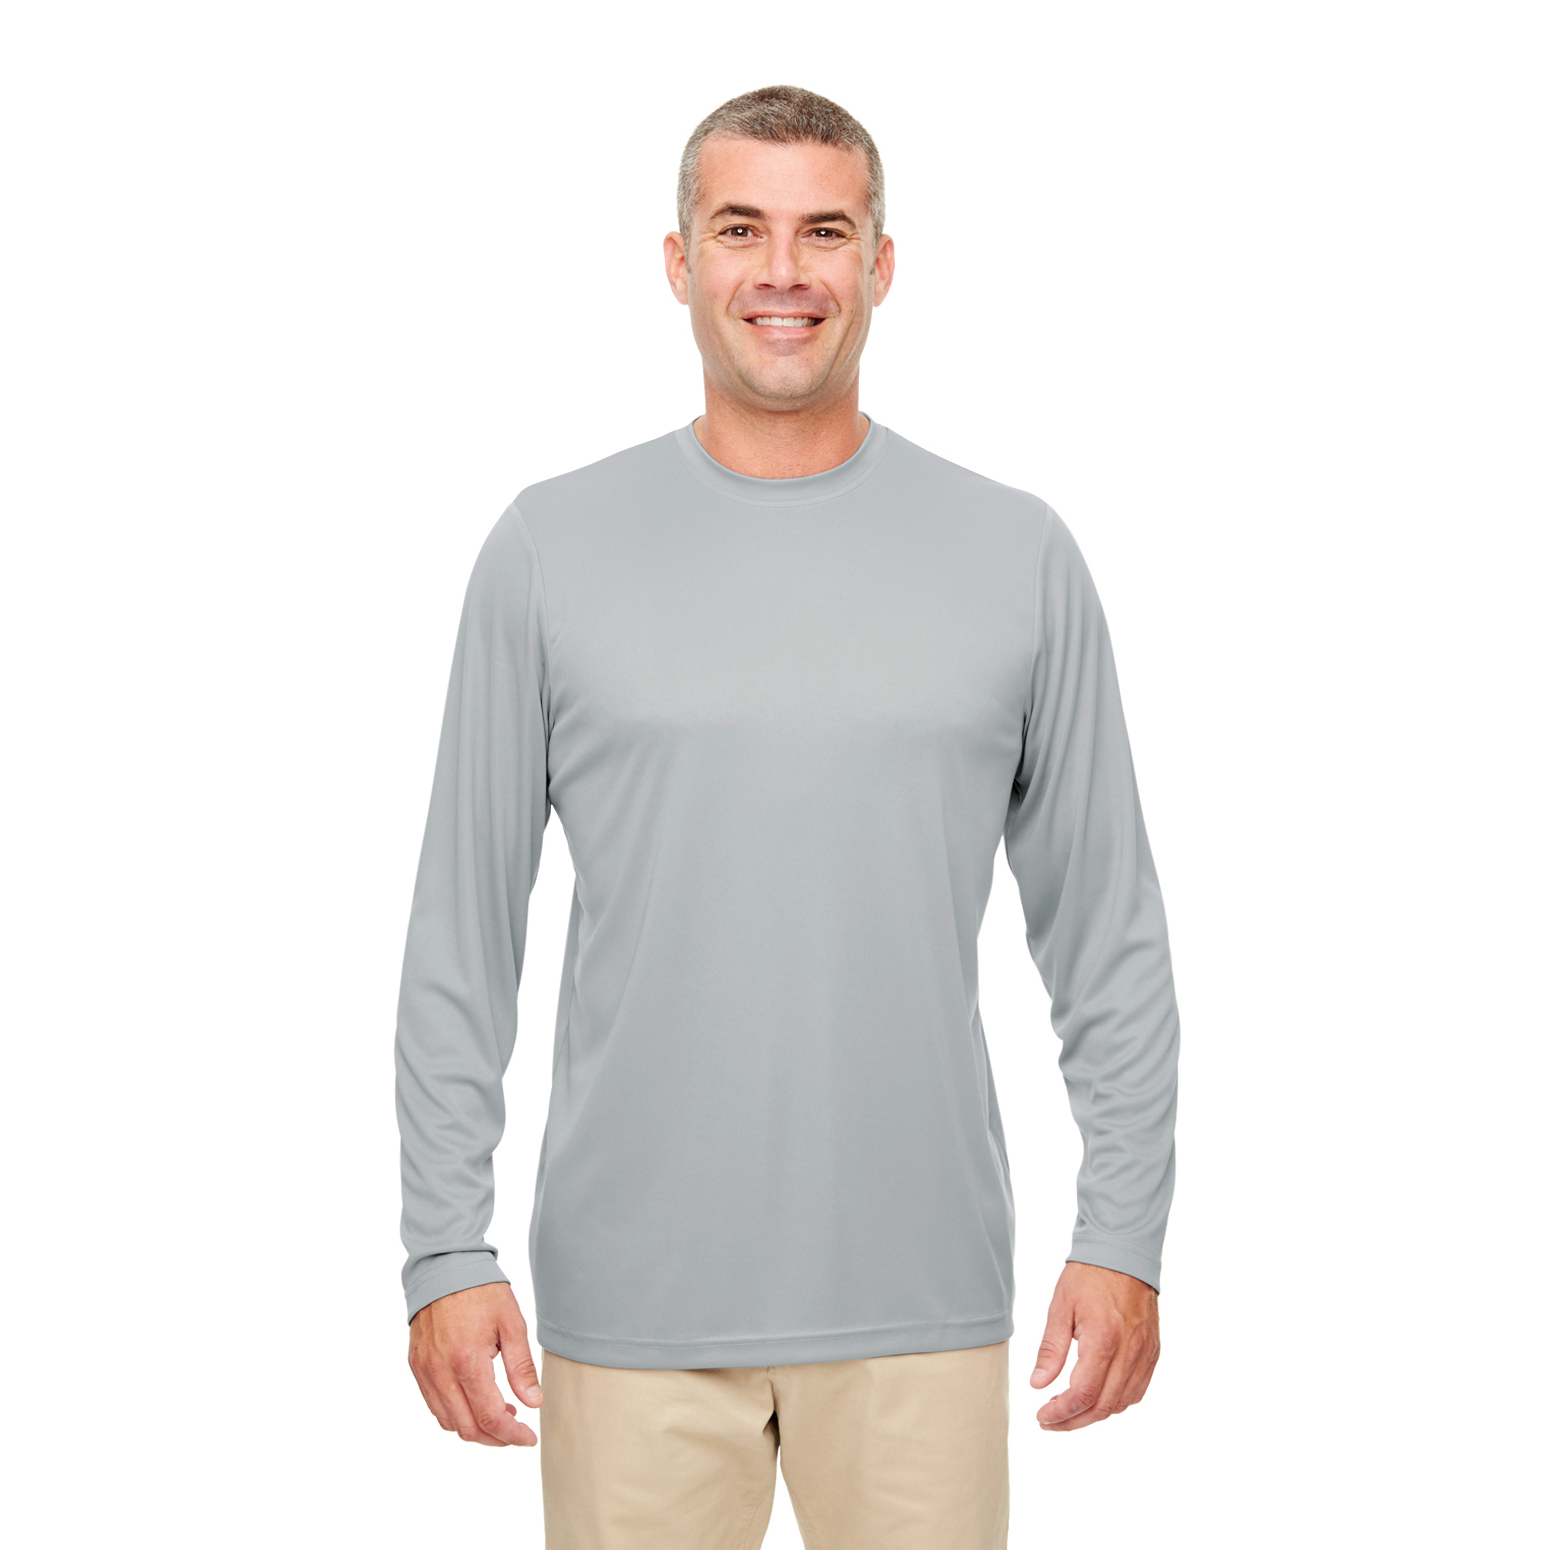 Men's Long Sleeve Performance Shirt